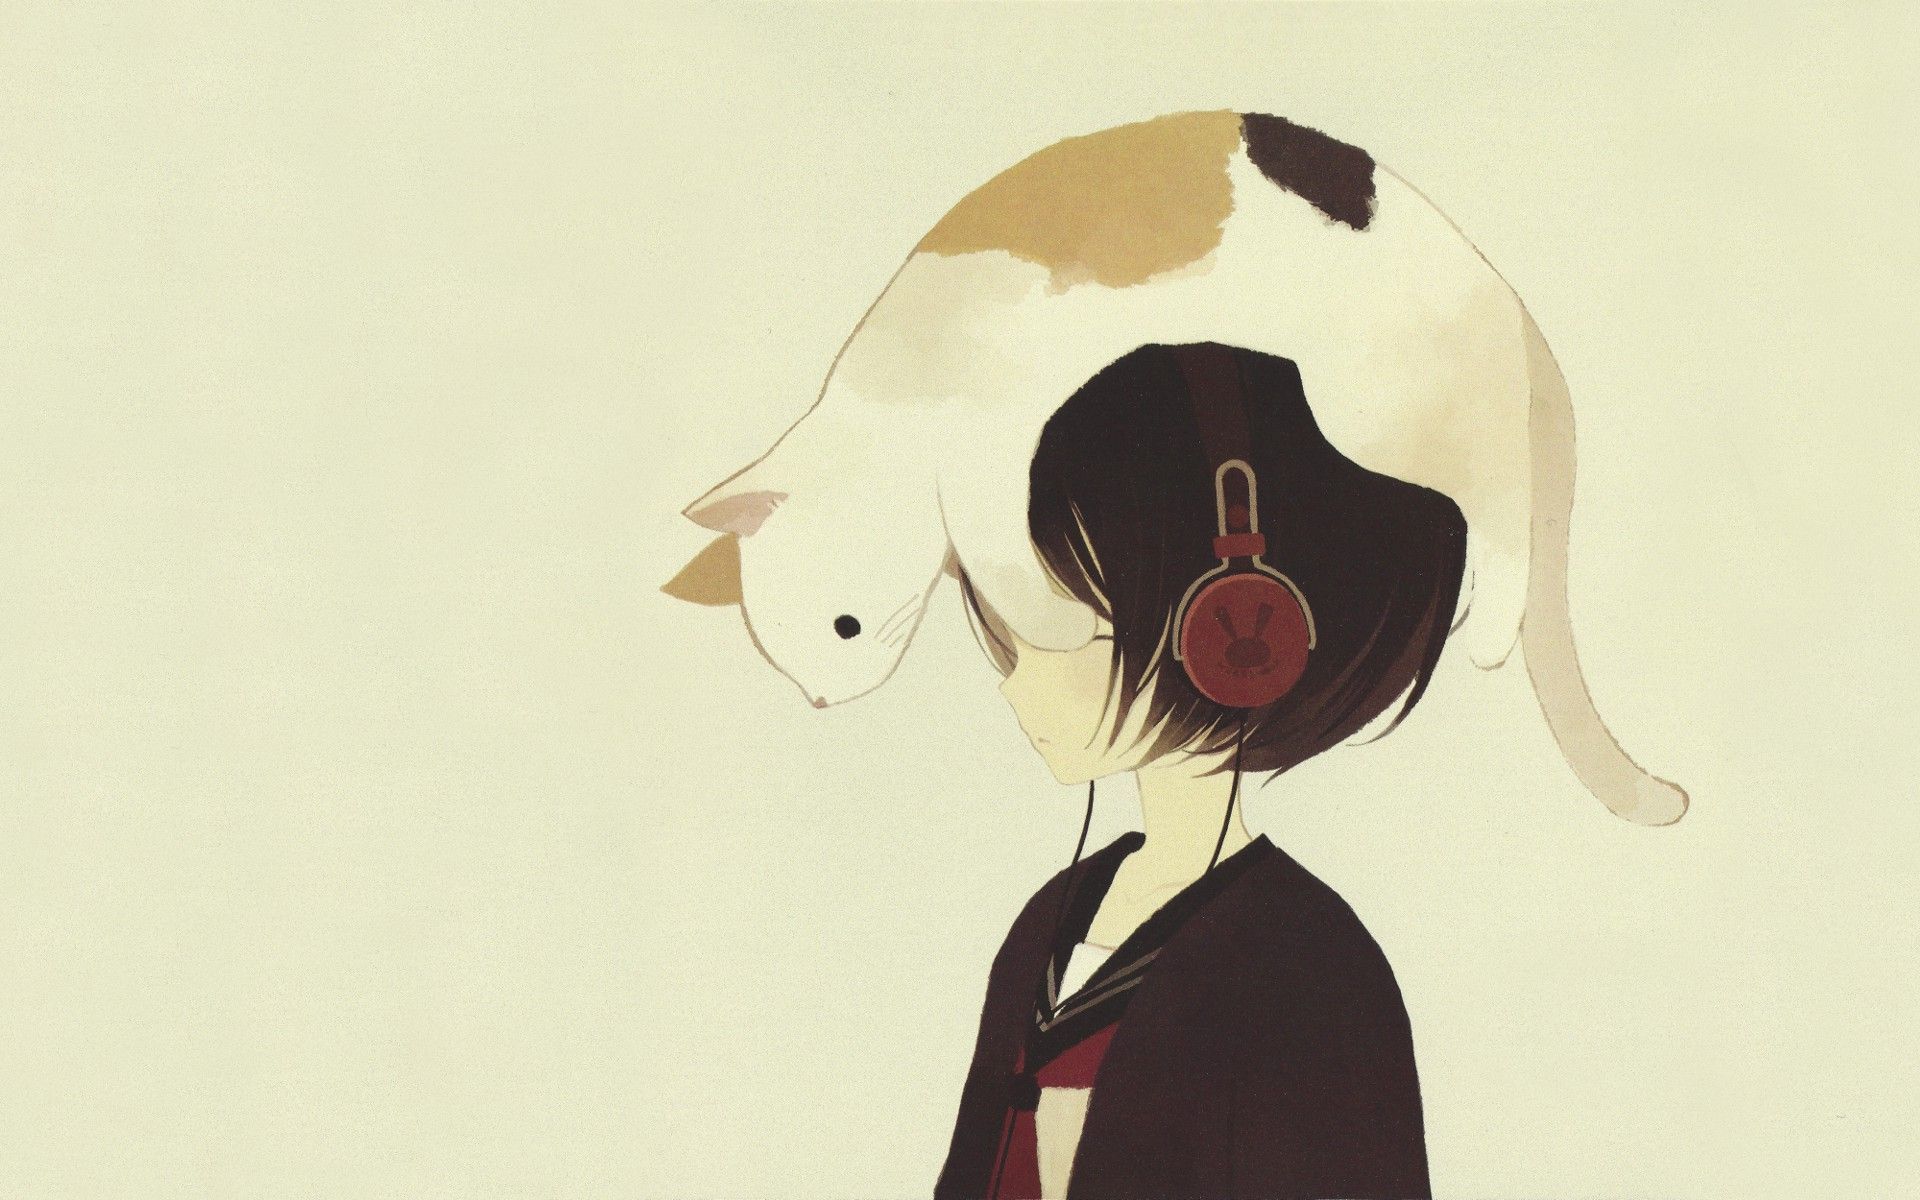 Anime Girls With Headphones Wallpaper 1920x1200 ID19520